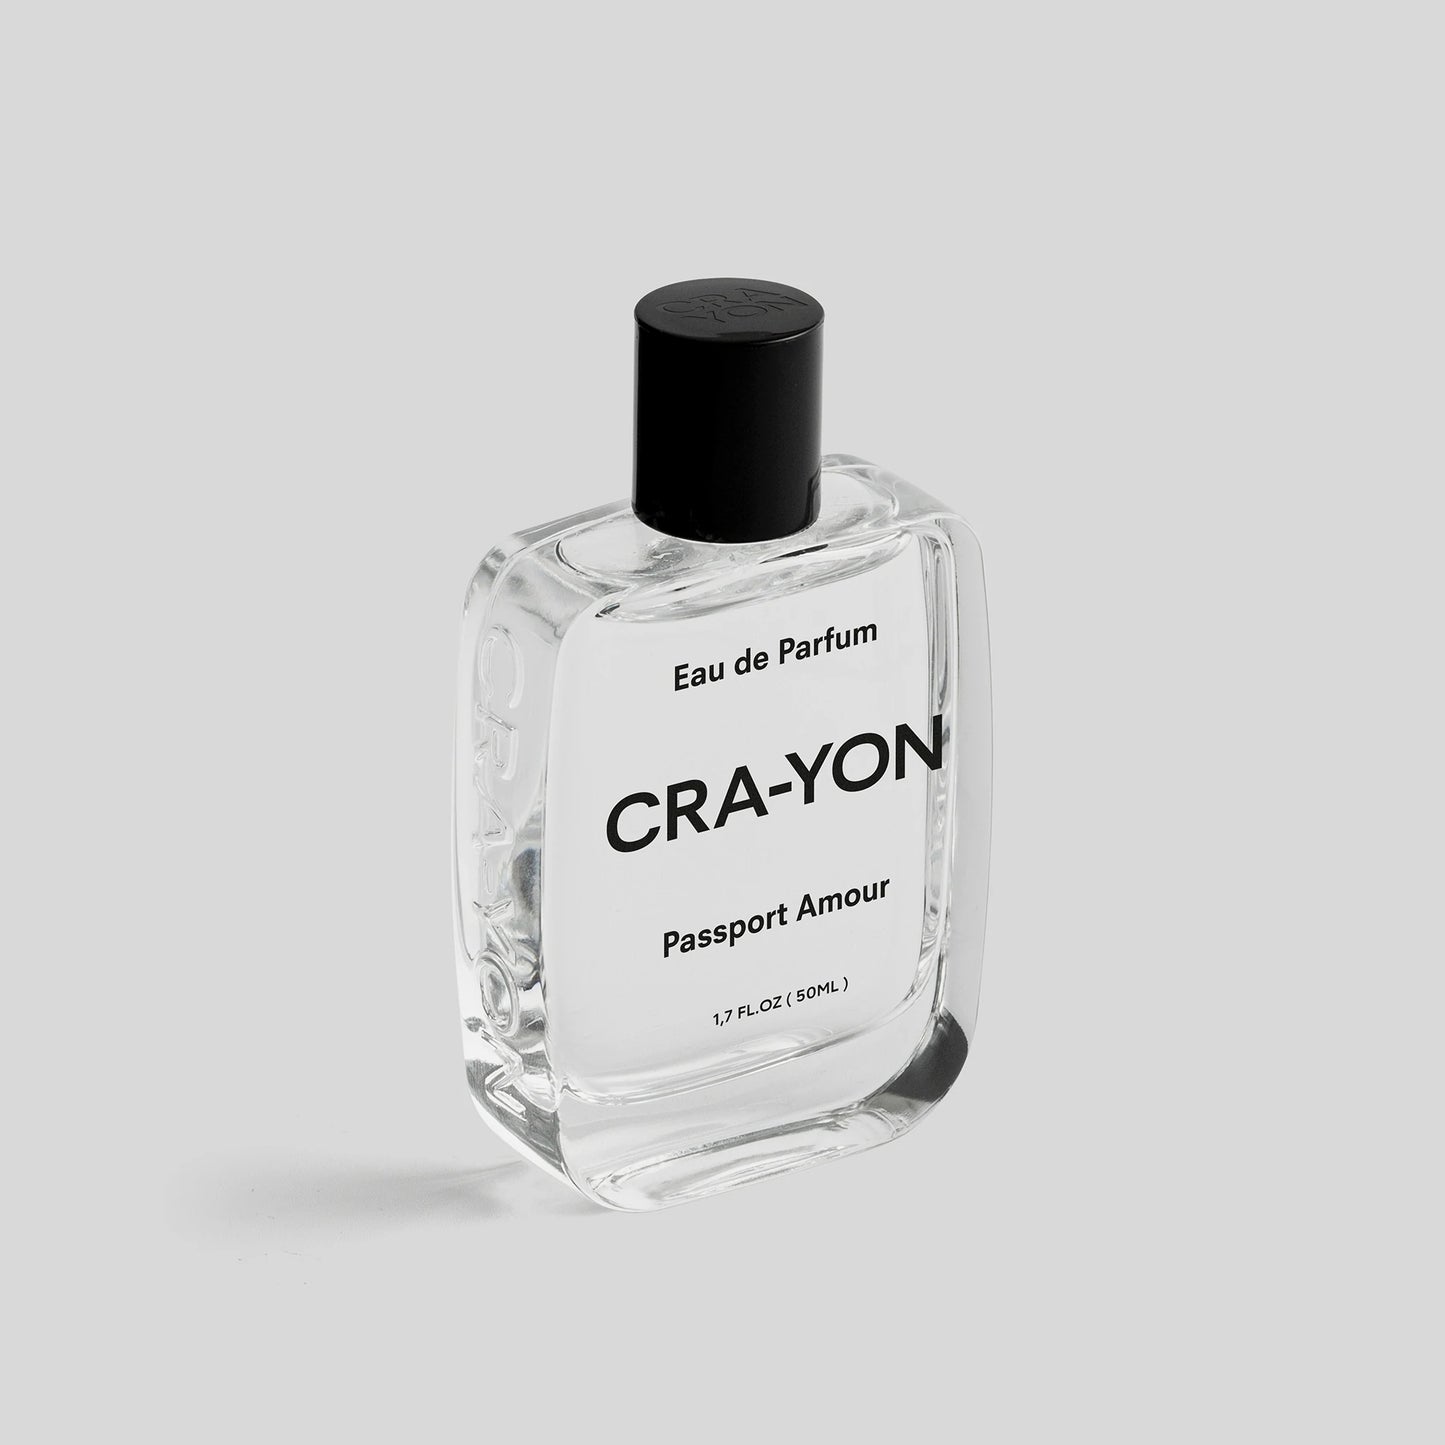 CRA-YON Eau De Perfum Passport Amour